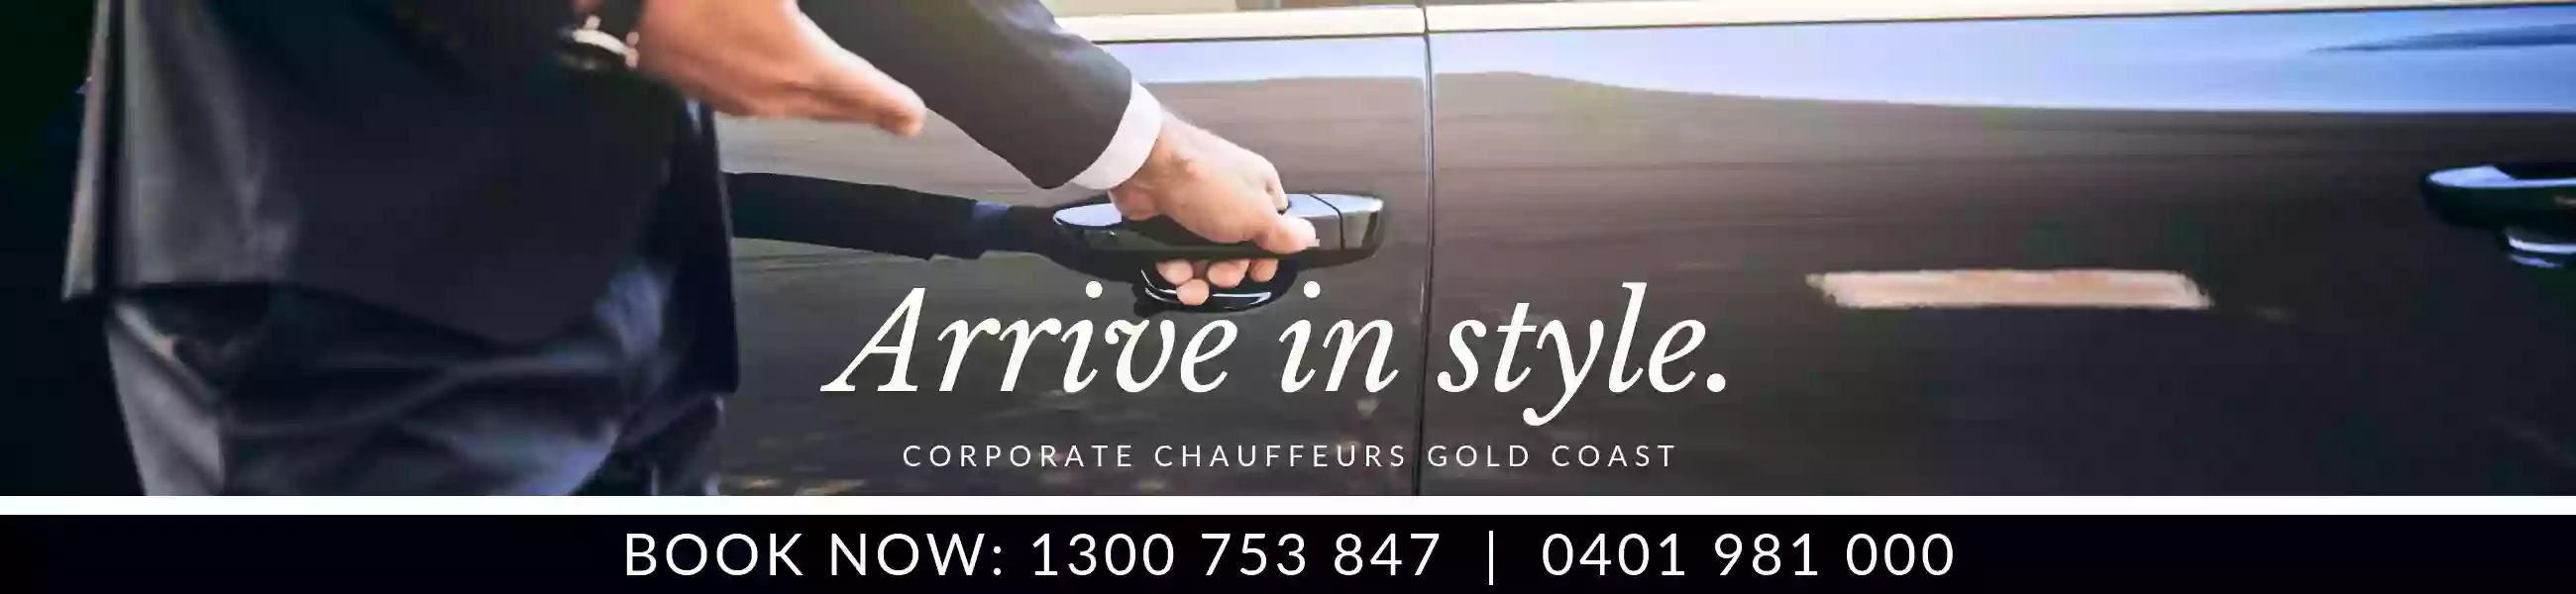 Corporate Chauffeurs Gold Coast